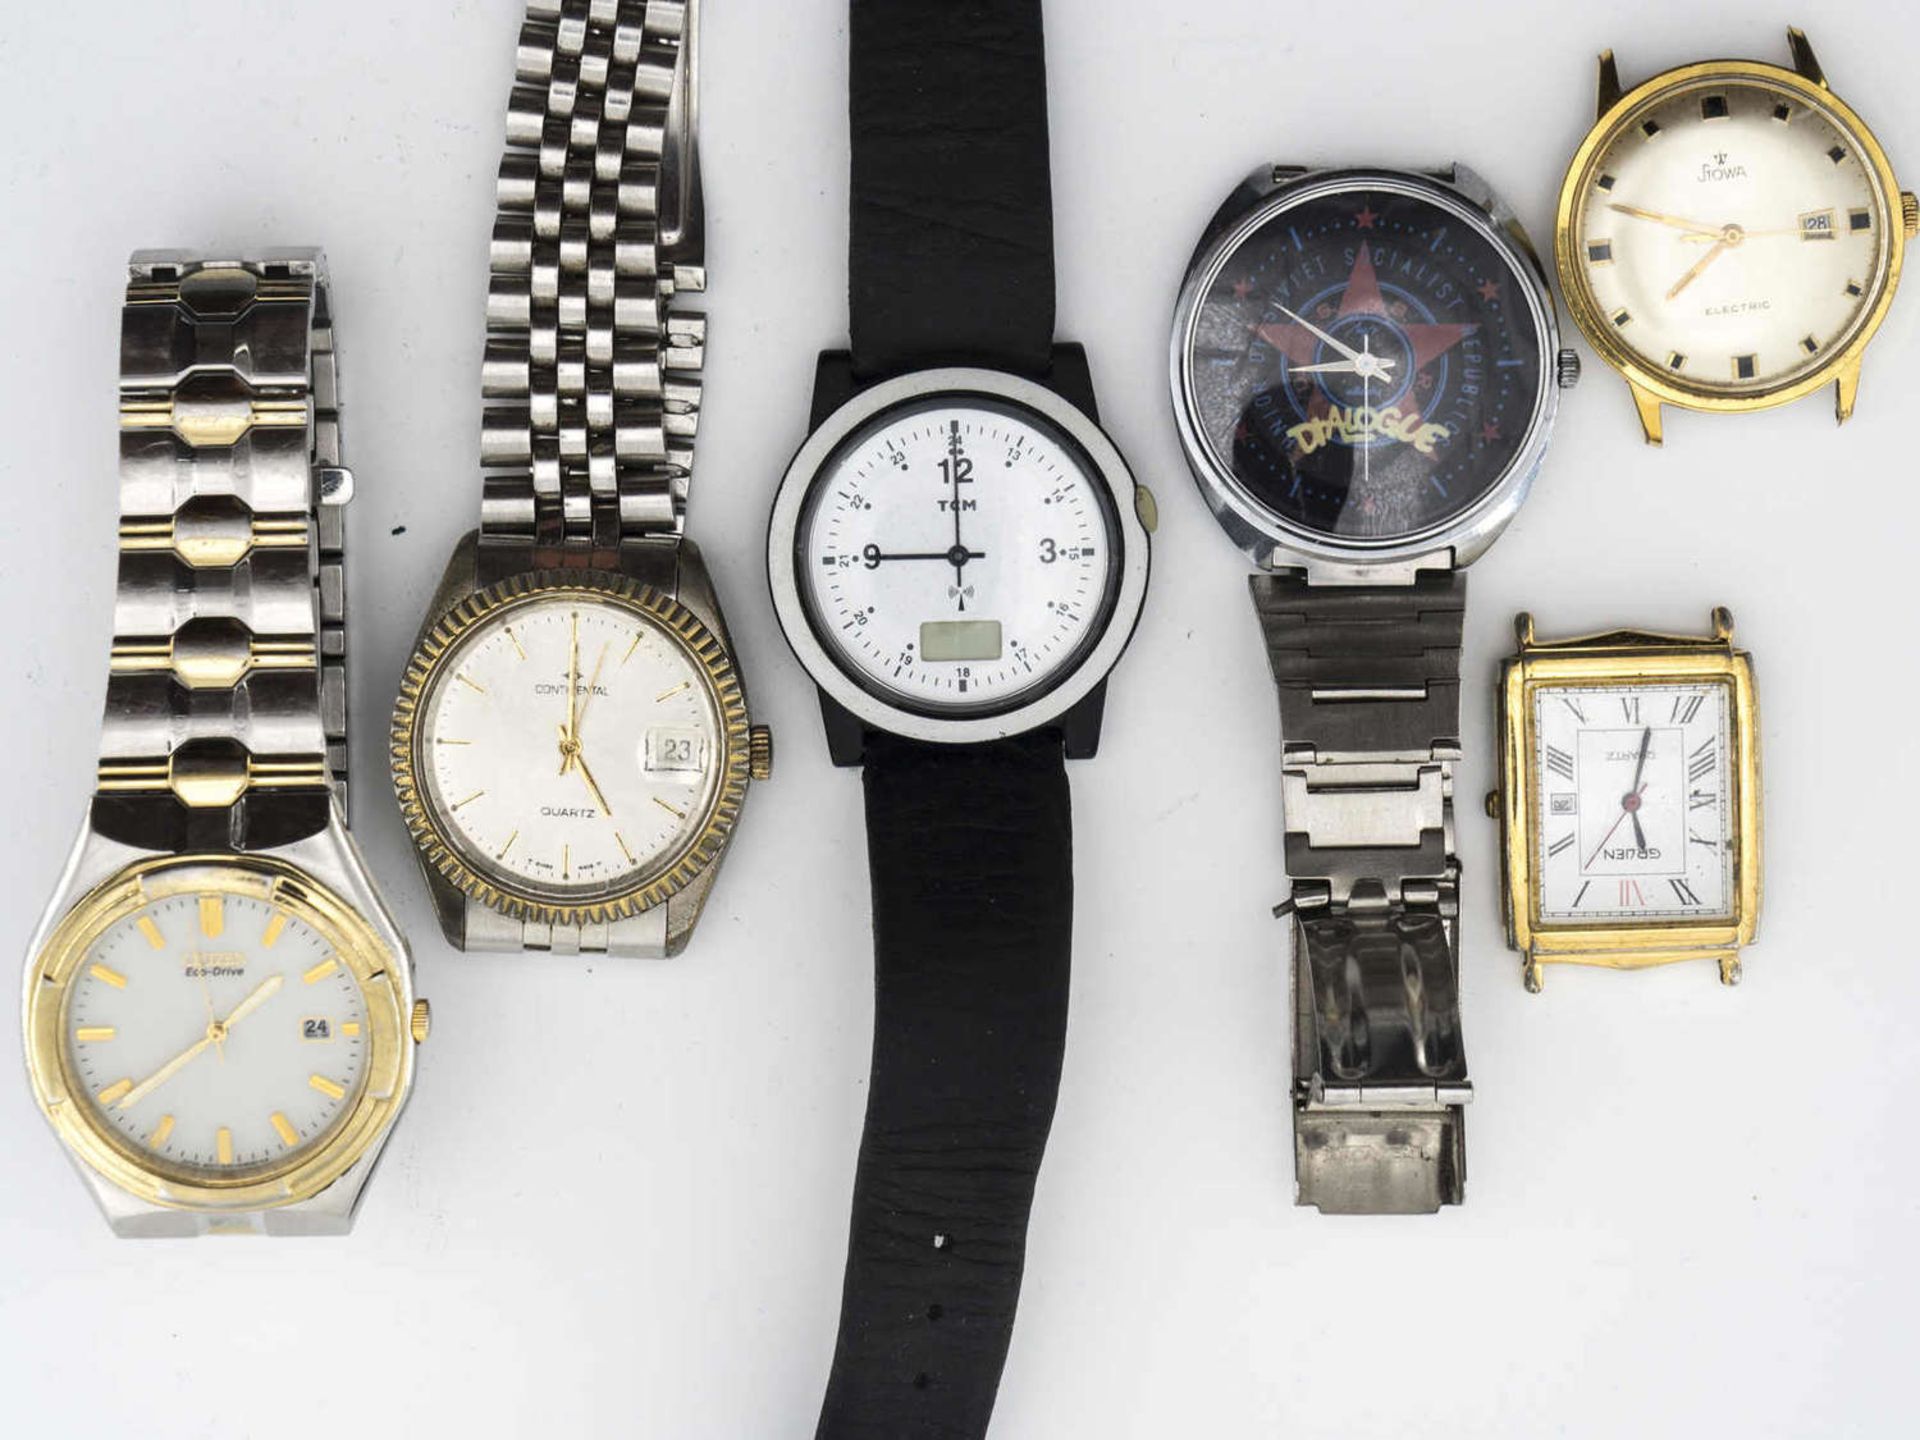 Lot Armbanduhren, verschiedene Marken, dabei auch Citizen Eco Drive. Nicht getestet. Bitte